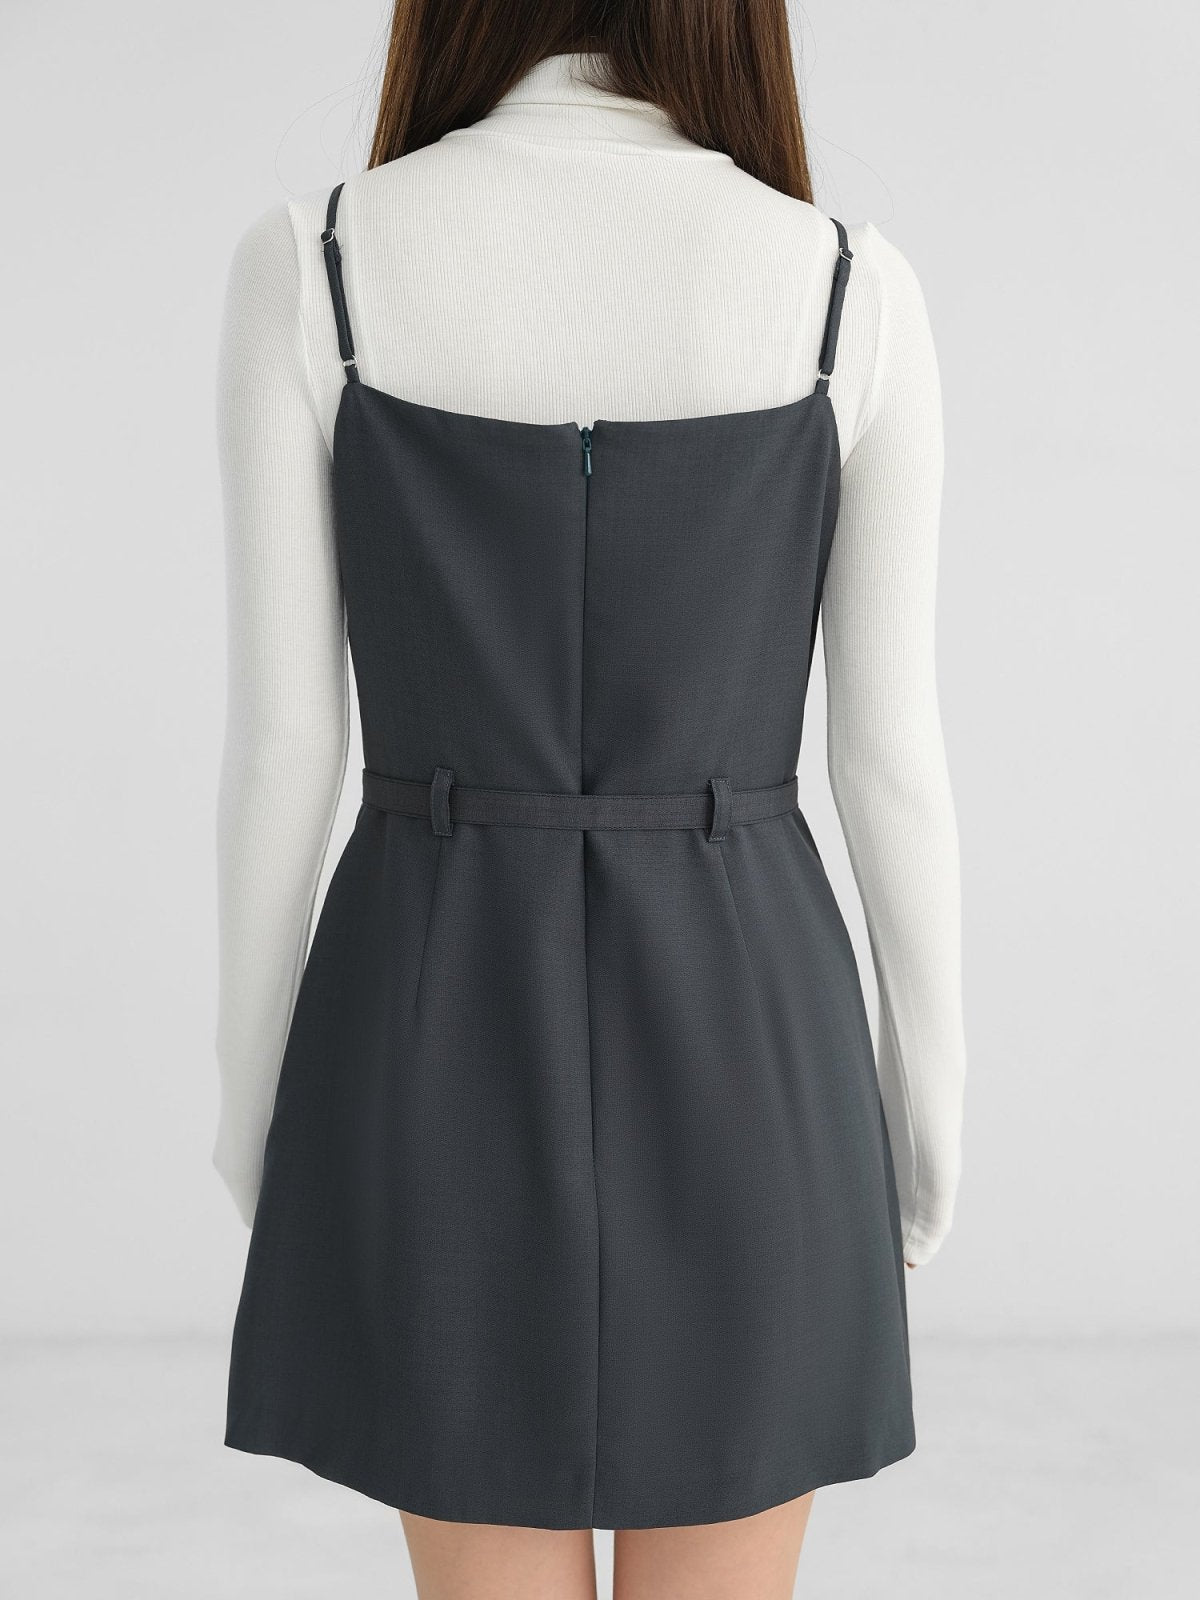 Henna Buckle Mini Dress - DAG-DD1301-23NavyS - Navy Blue - S - D'zage Designs